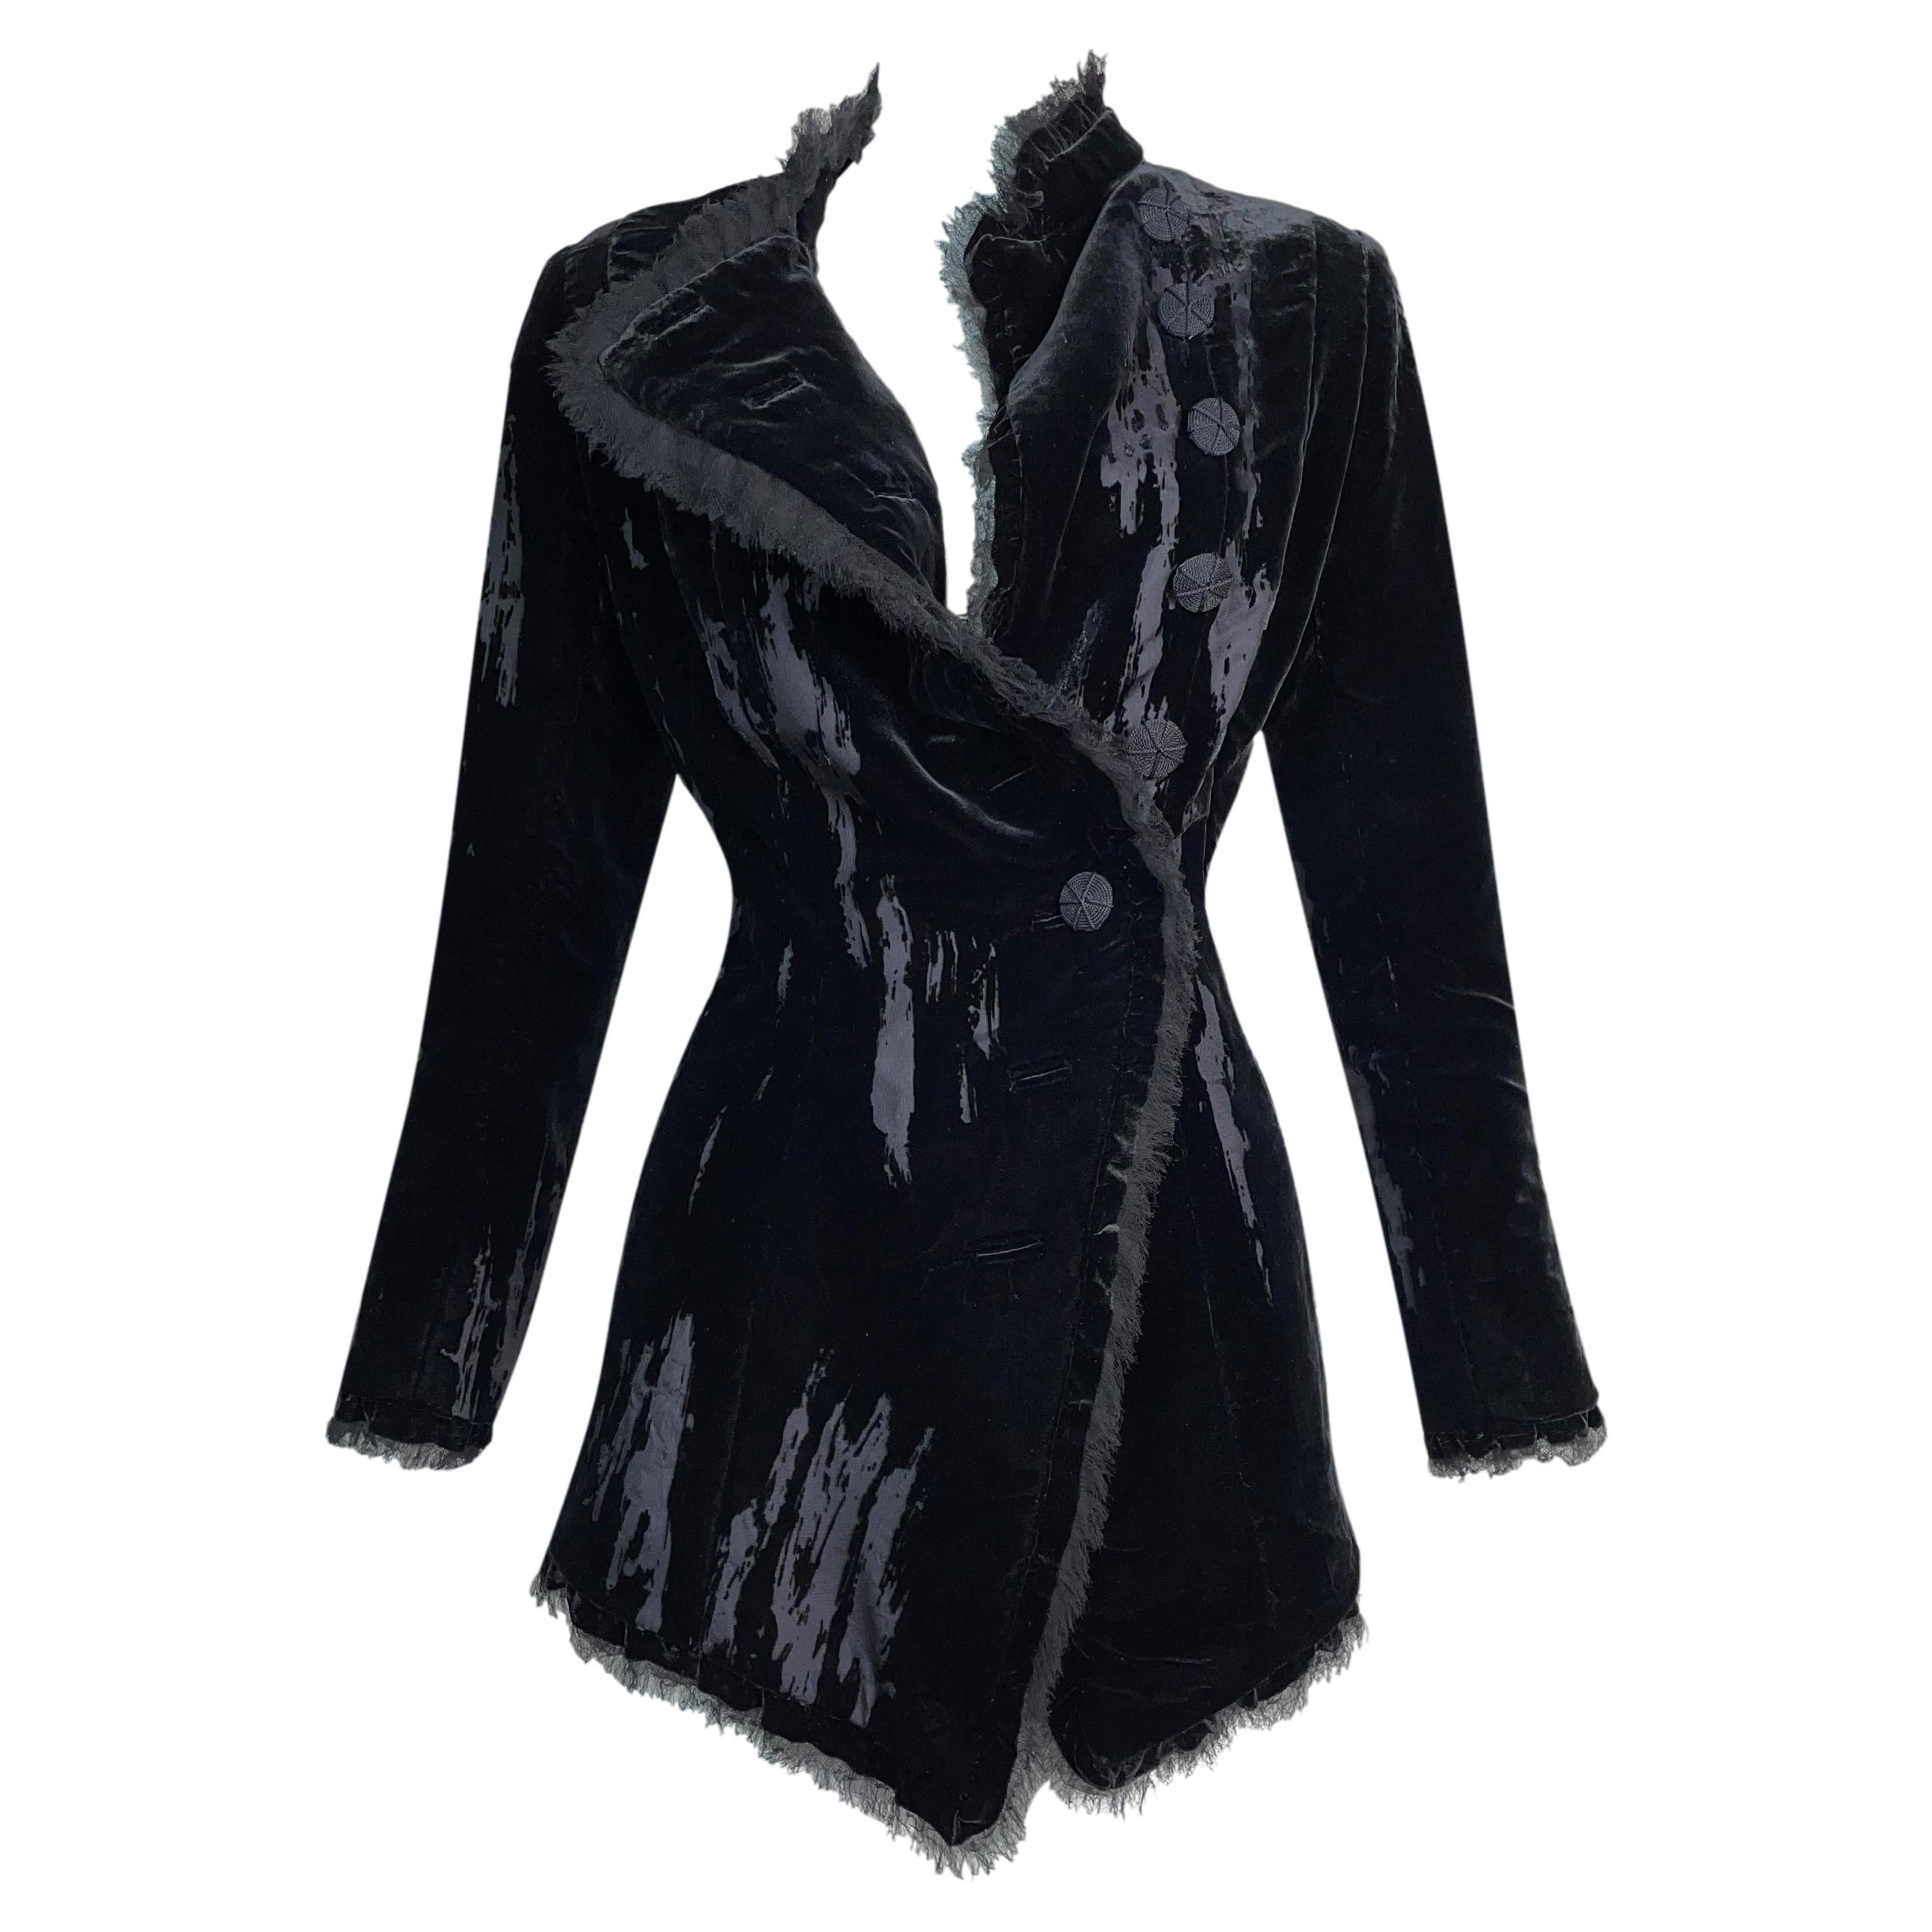 S/S 2005 Christian Dior by John Galliano Haute Couture Black Velvet Jacket